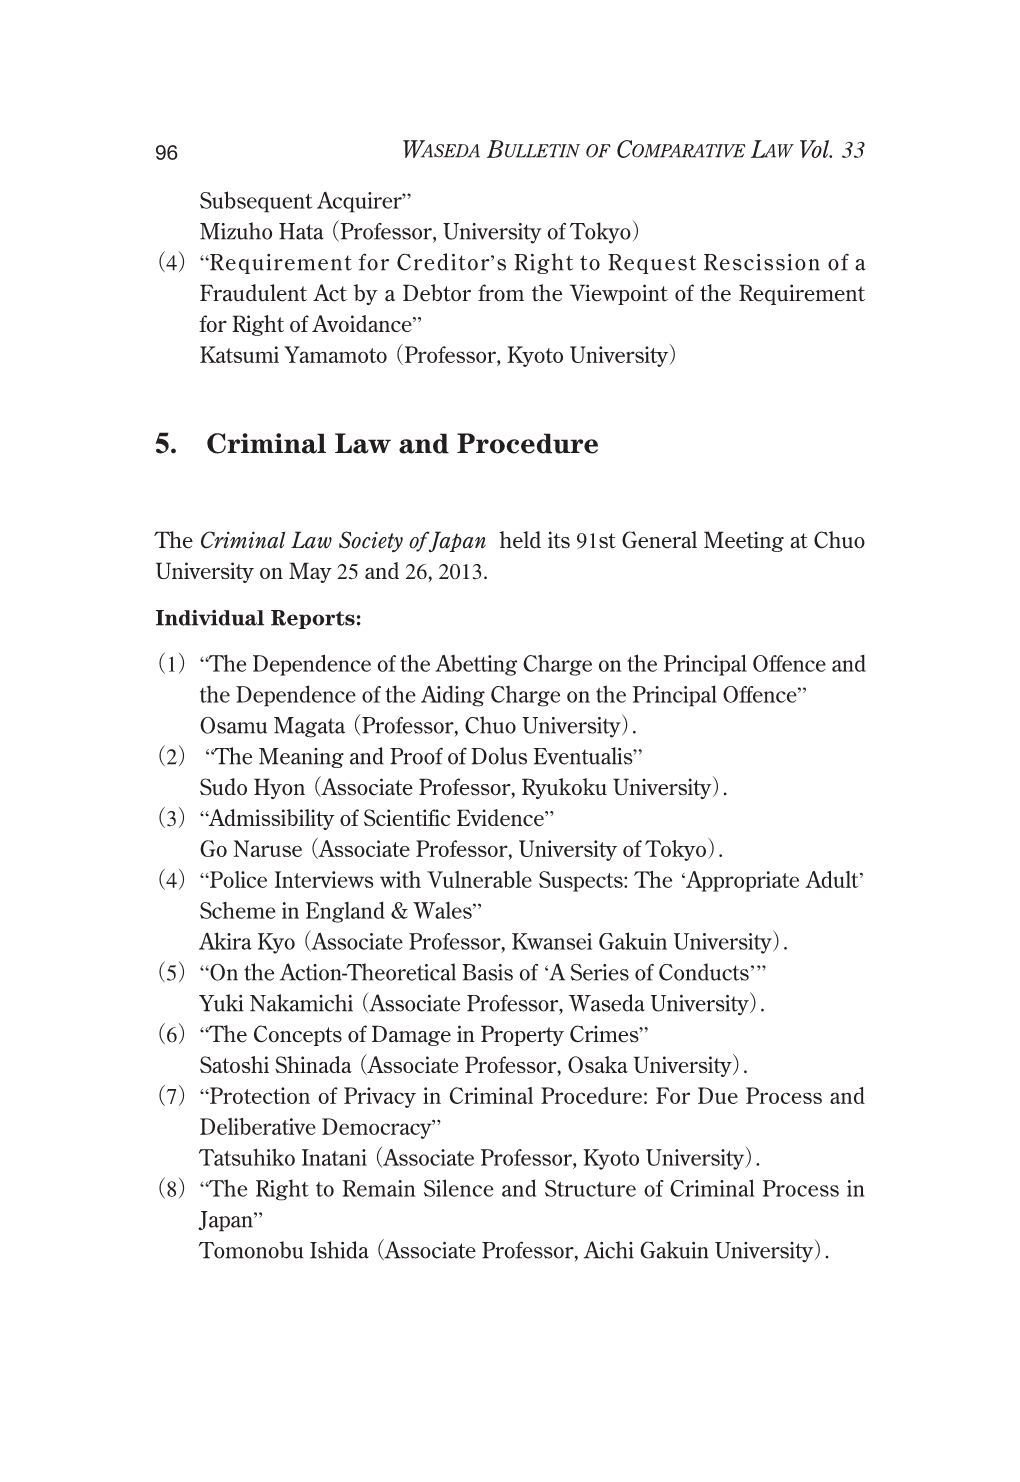 5. Criminal Law and Procedure